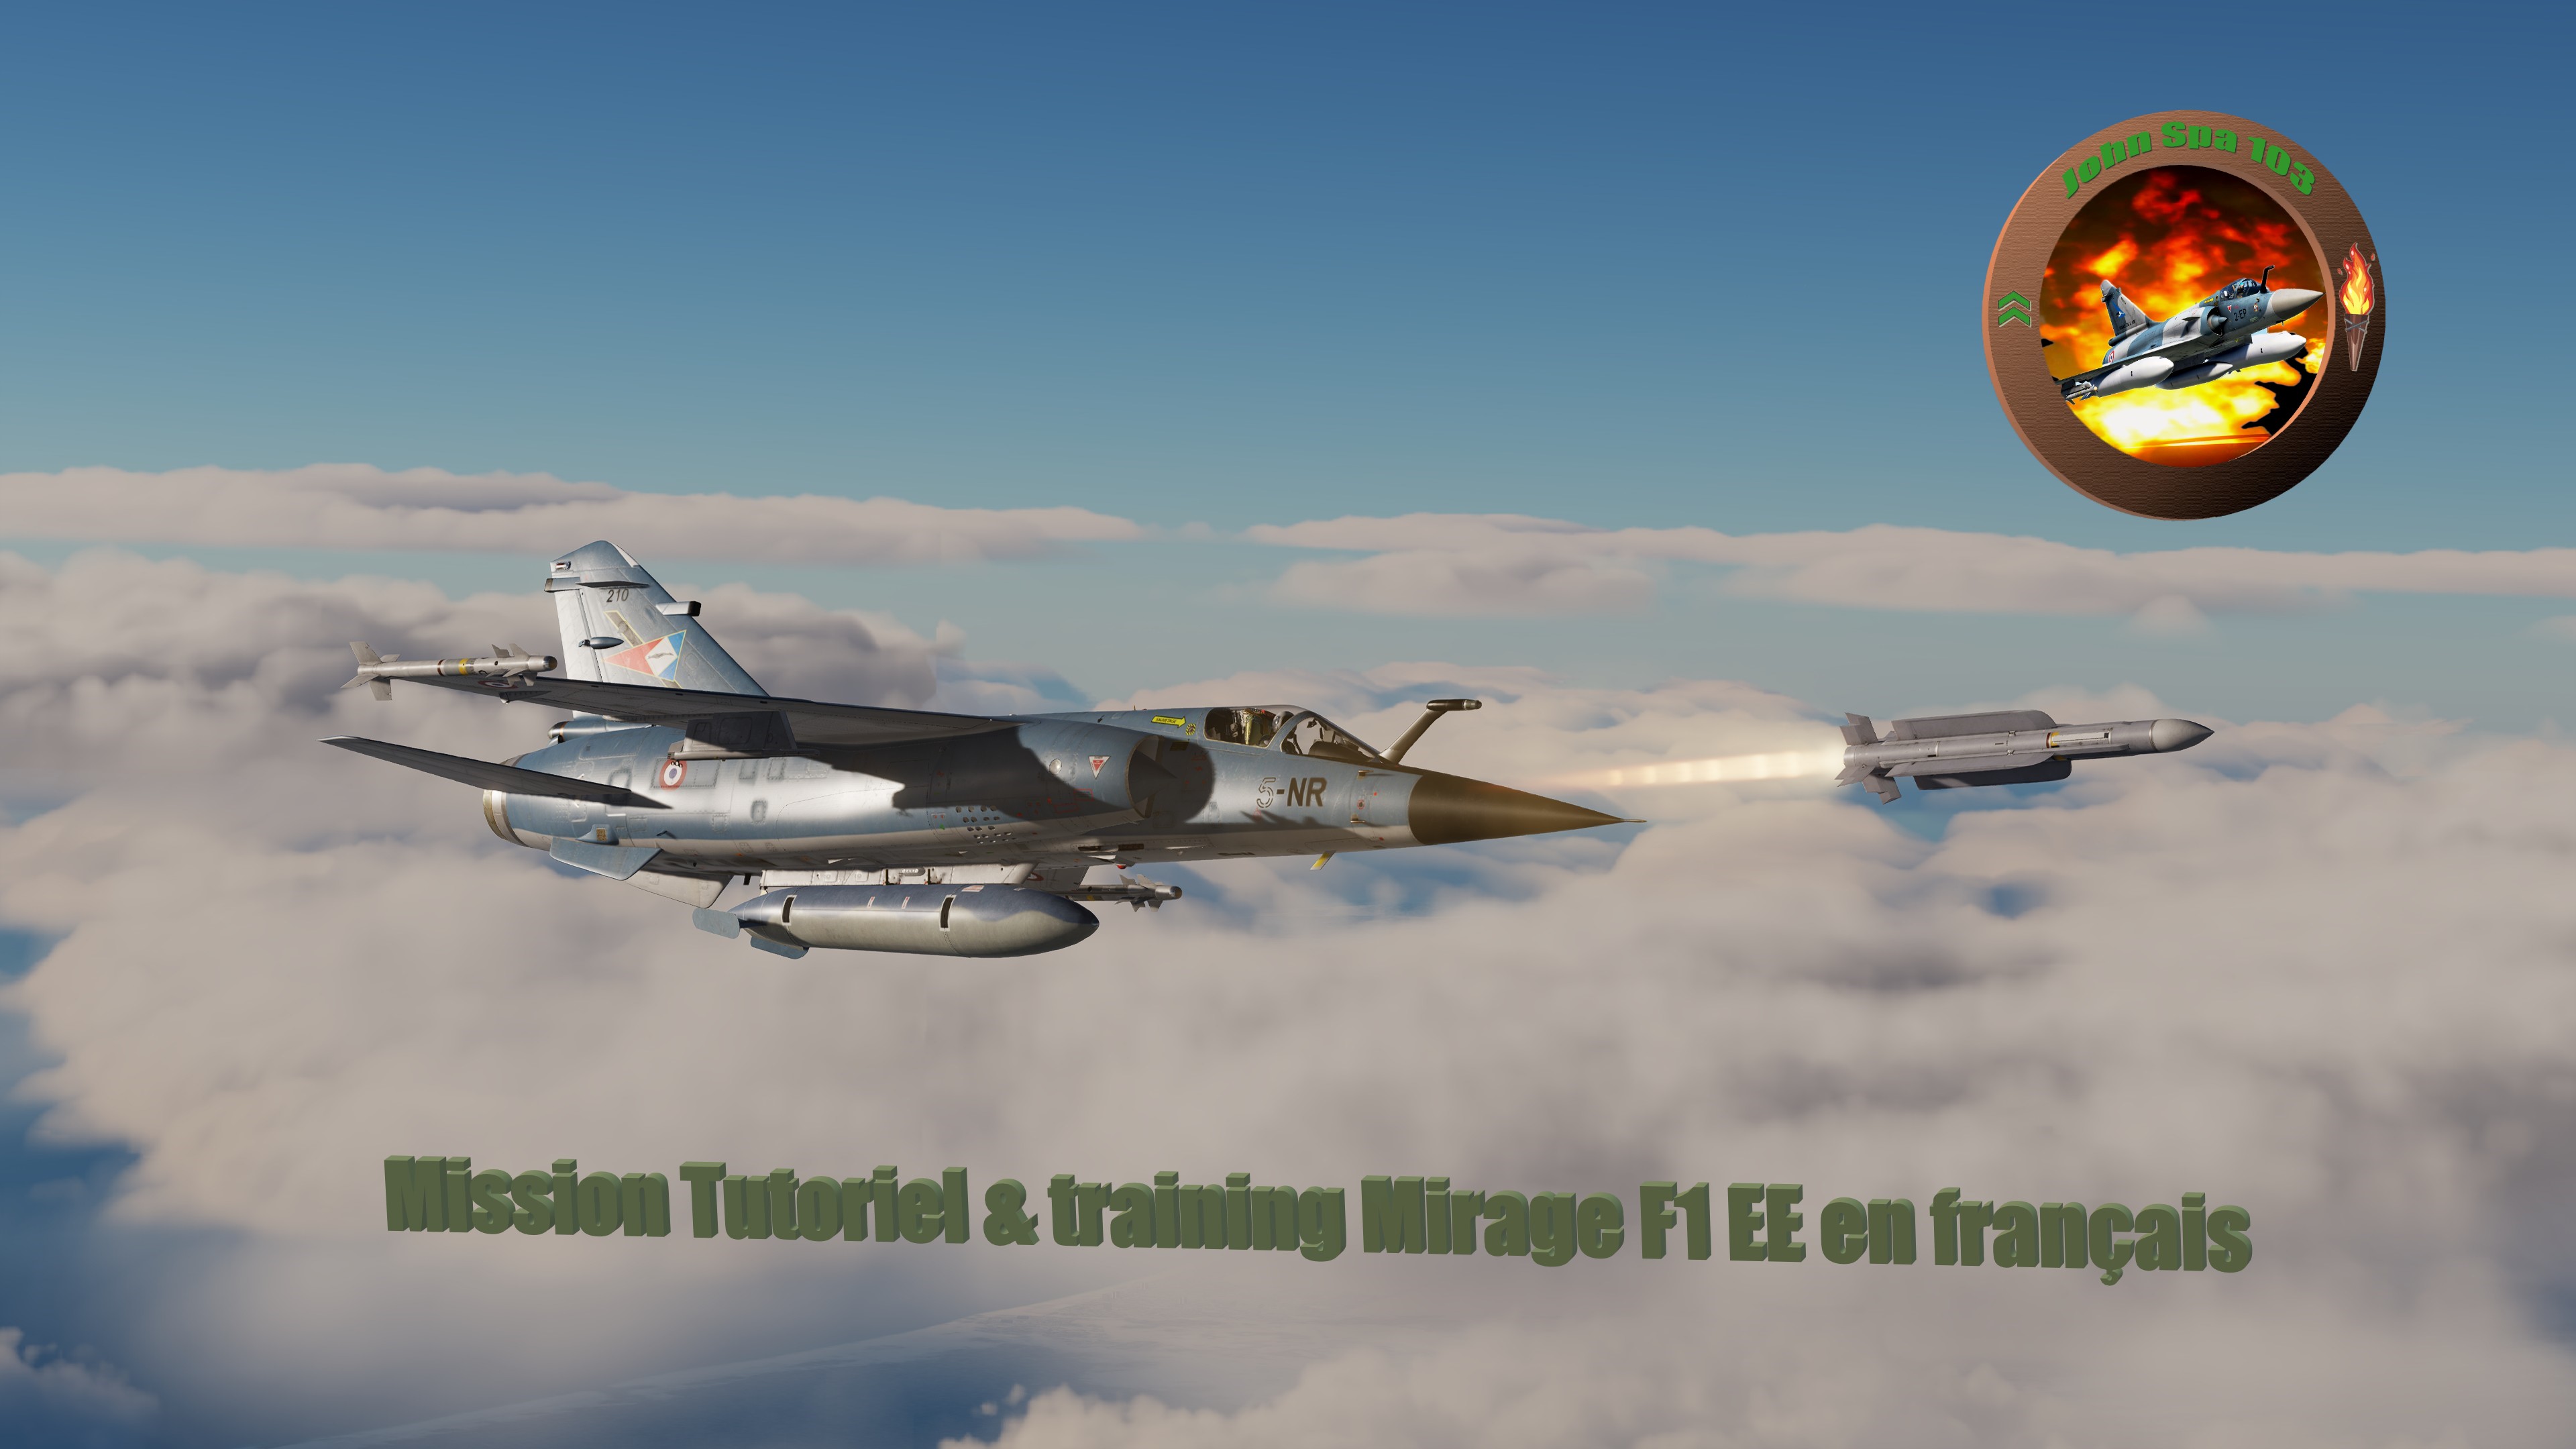 Mission tutoriel / training Mirage F1EE Super 530 F